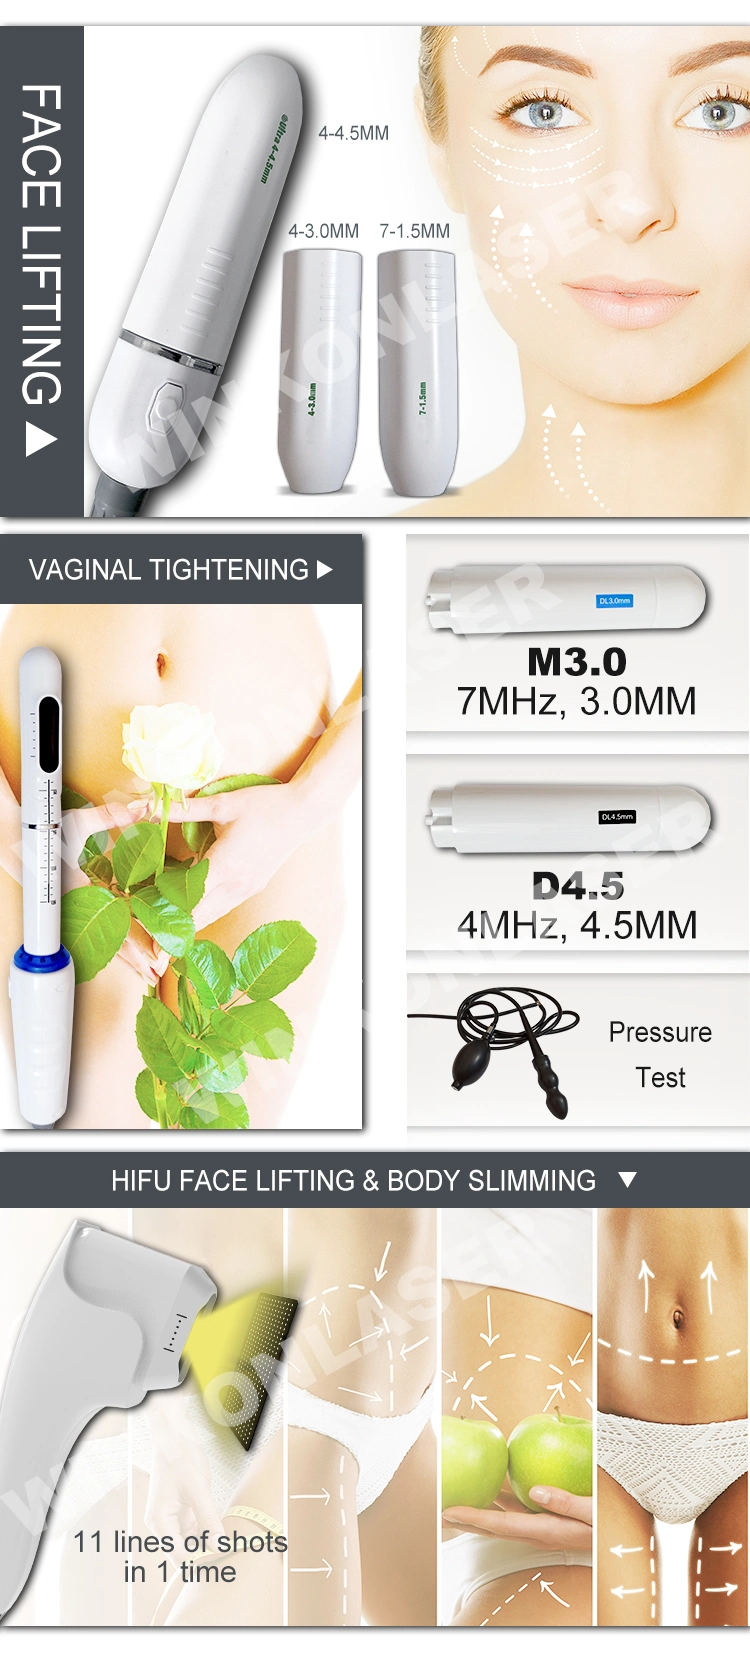 5D Hifu Korea Focused Ultrasound Vaginal Tightening Face Lift Body Slimming Beauty Machine